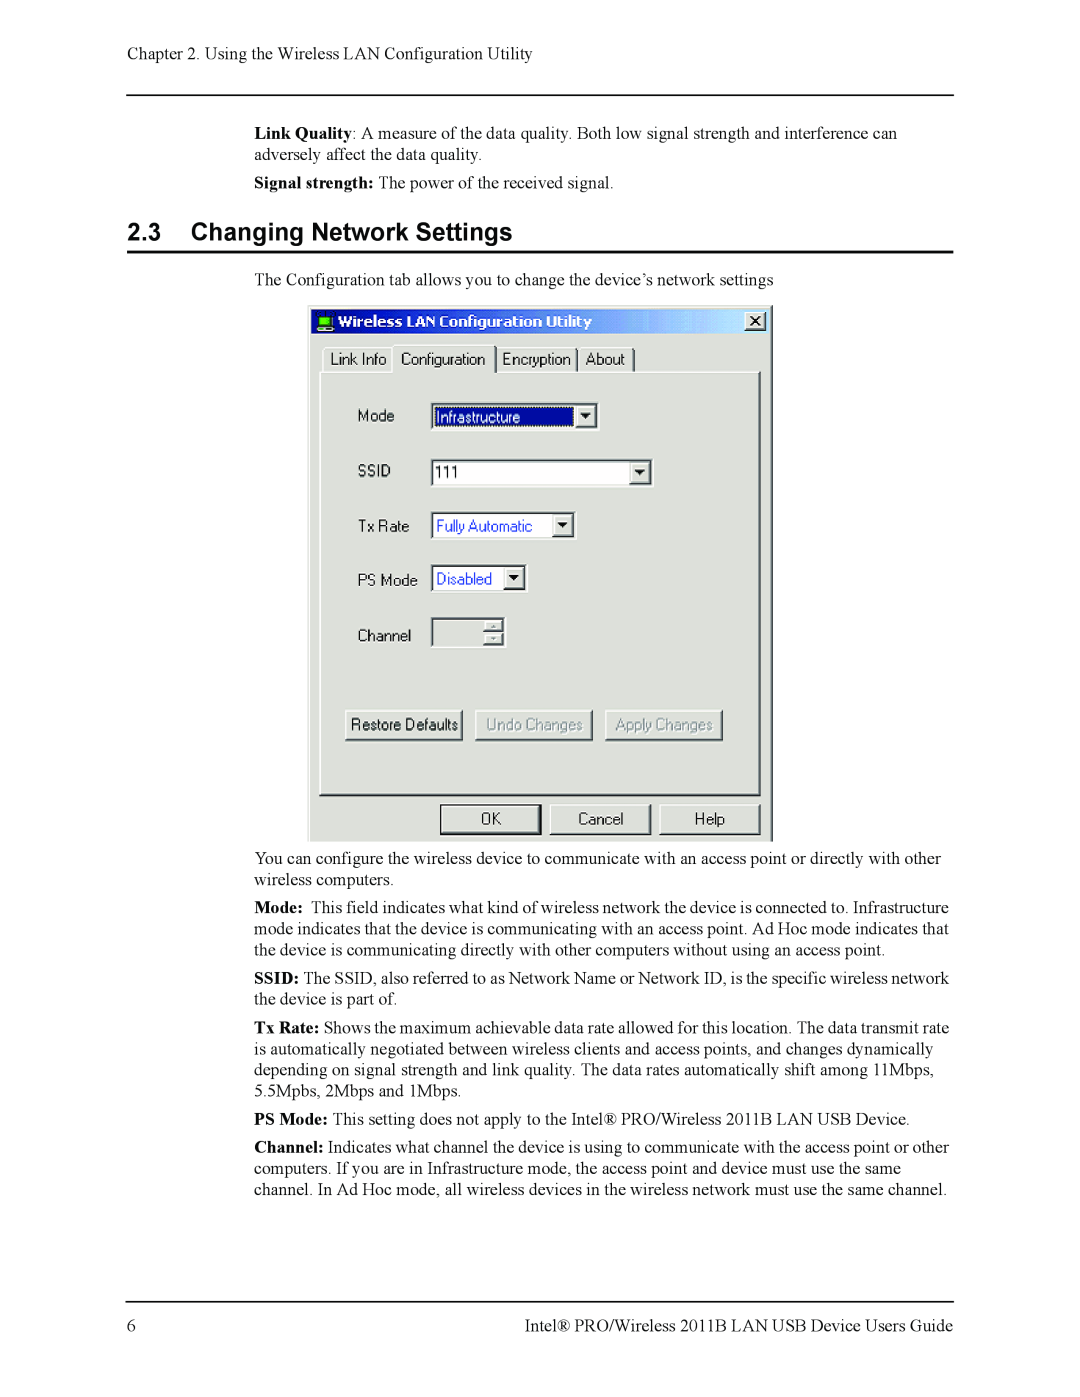 Intel 2011B manual 2.3Changing Network Settings 